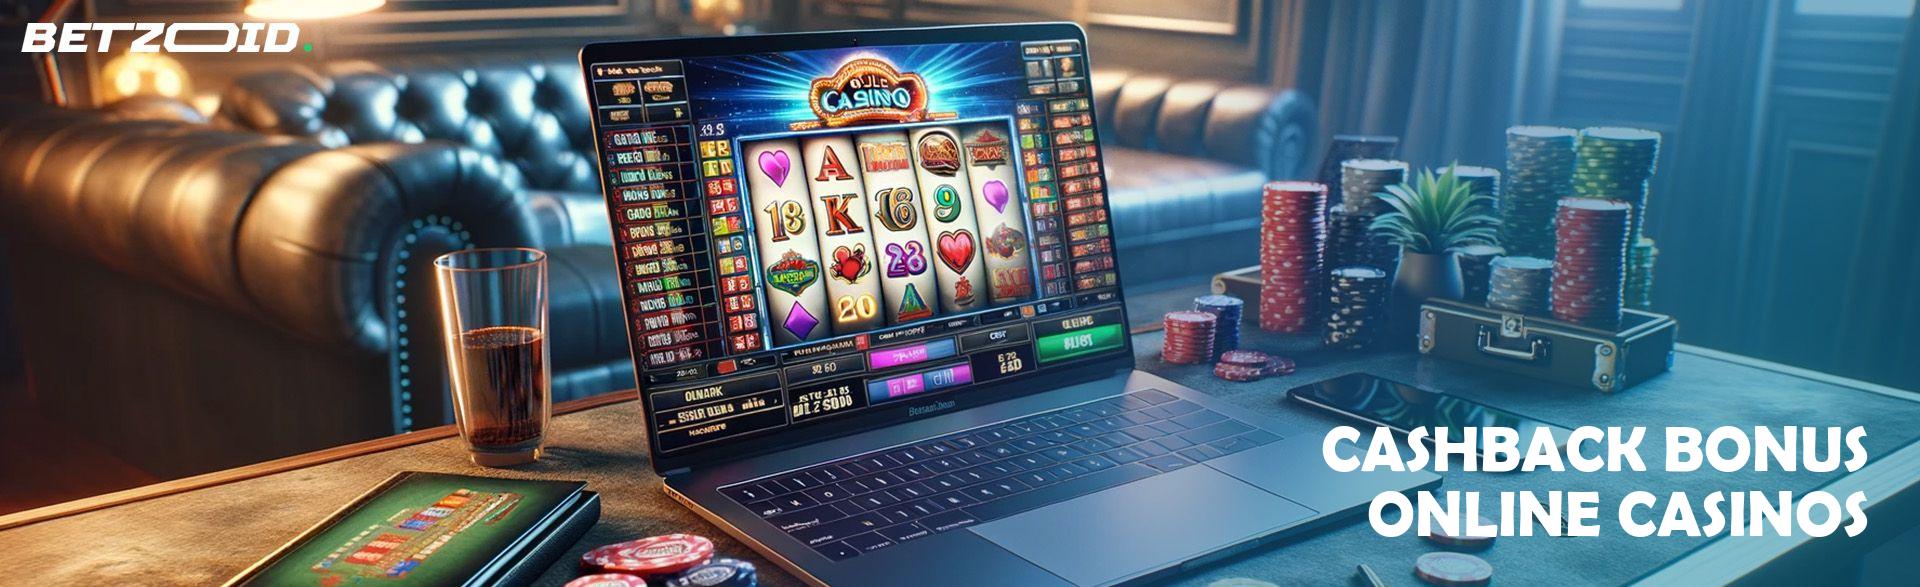 Cashback Bonus Online Casinos.